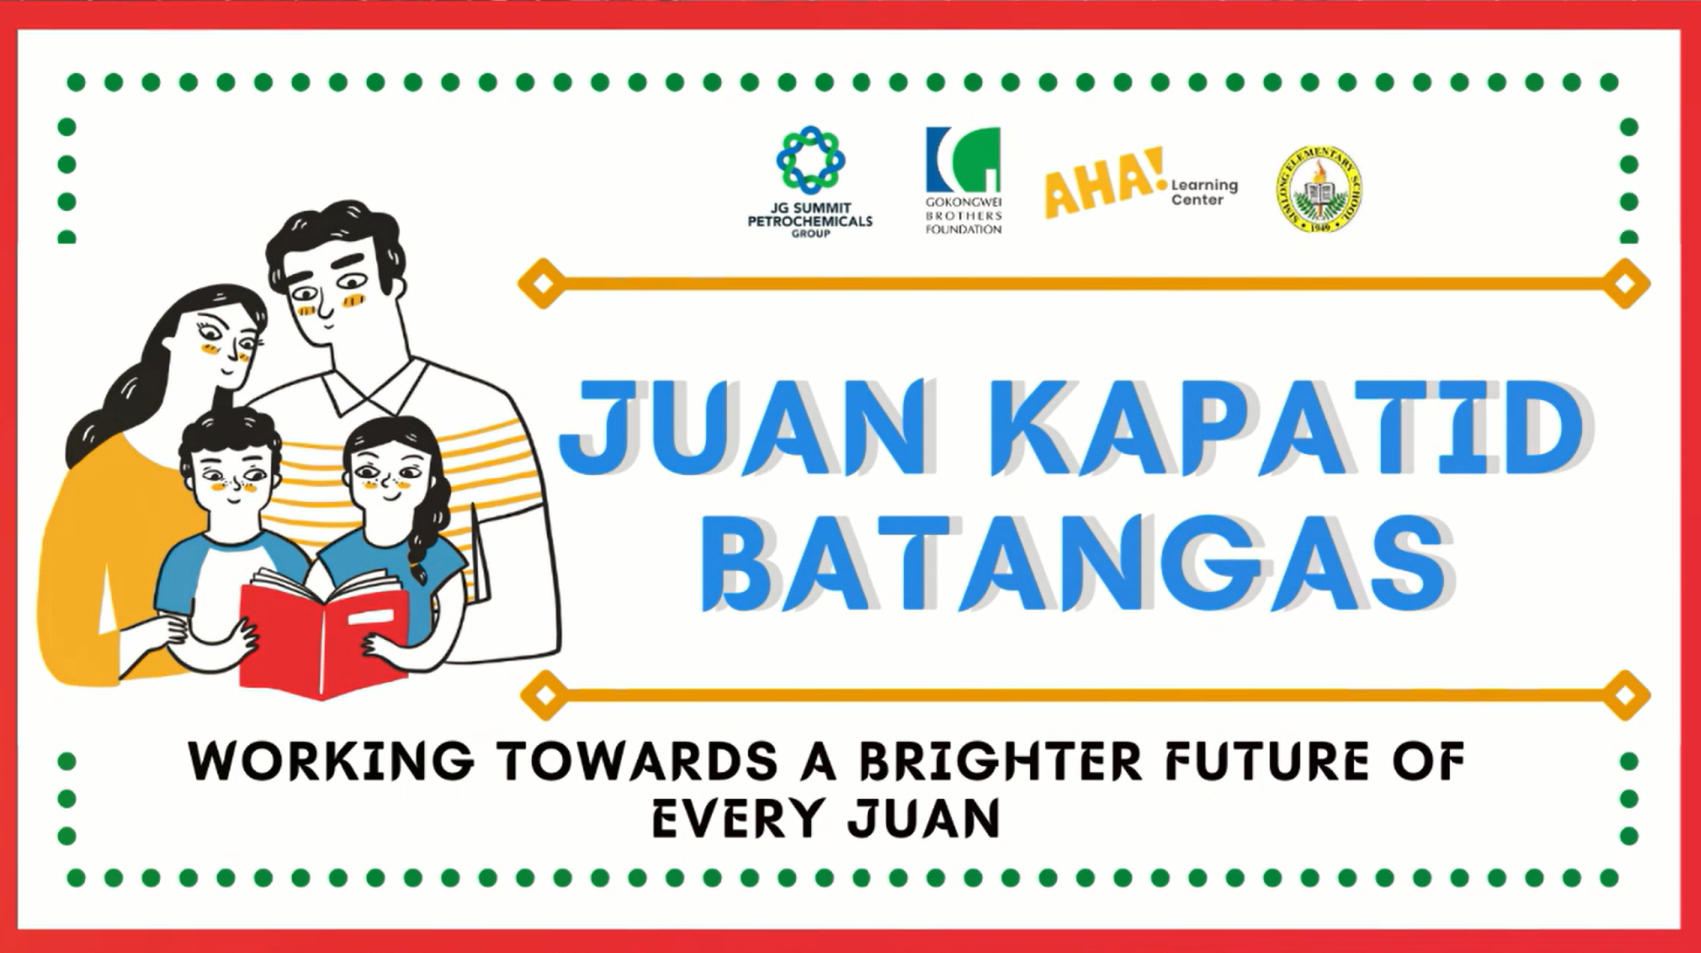 Juan Kapatid: A Community Working Towards A Brighter Tomorrow